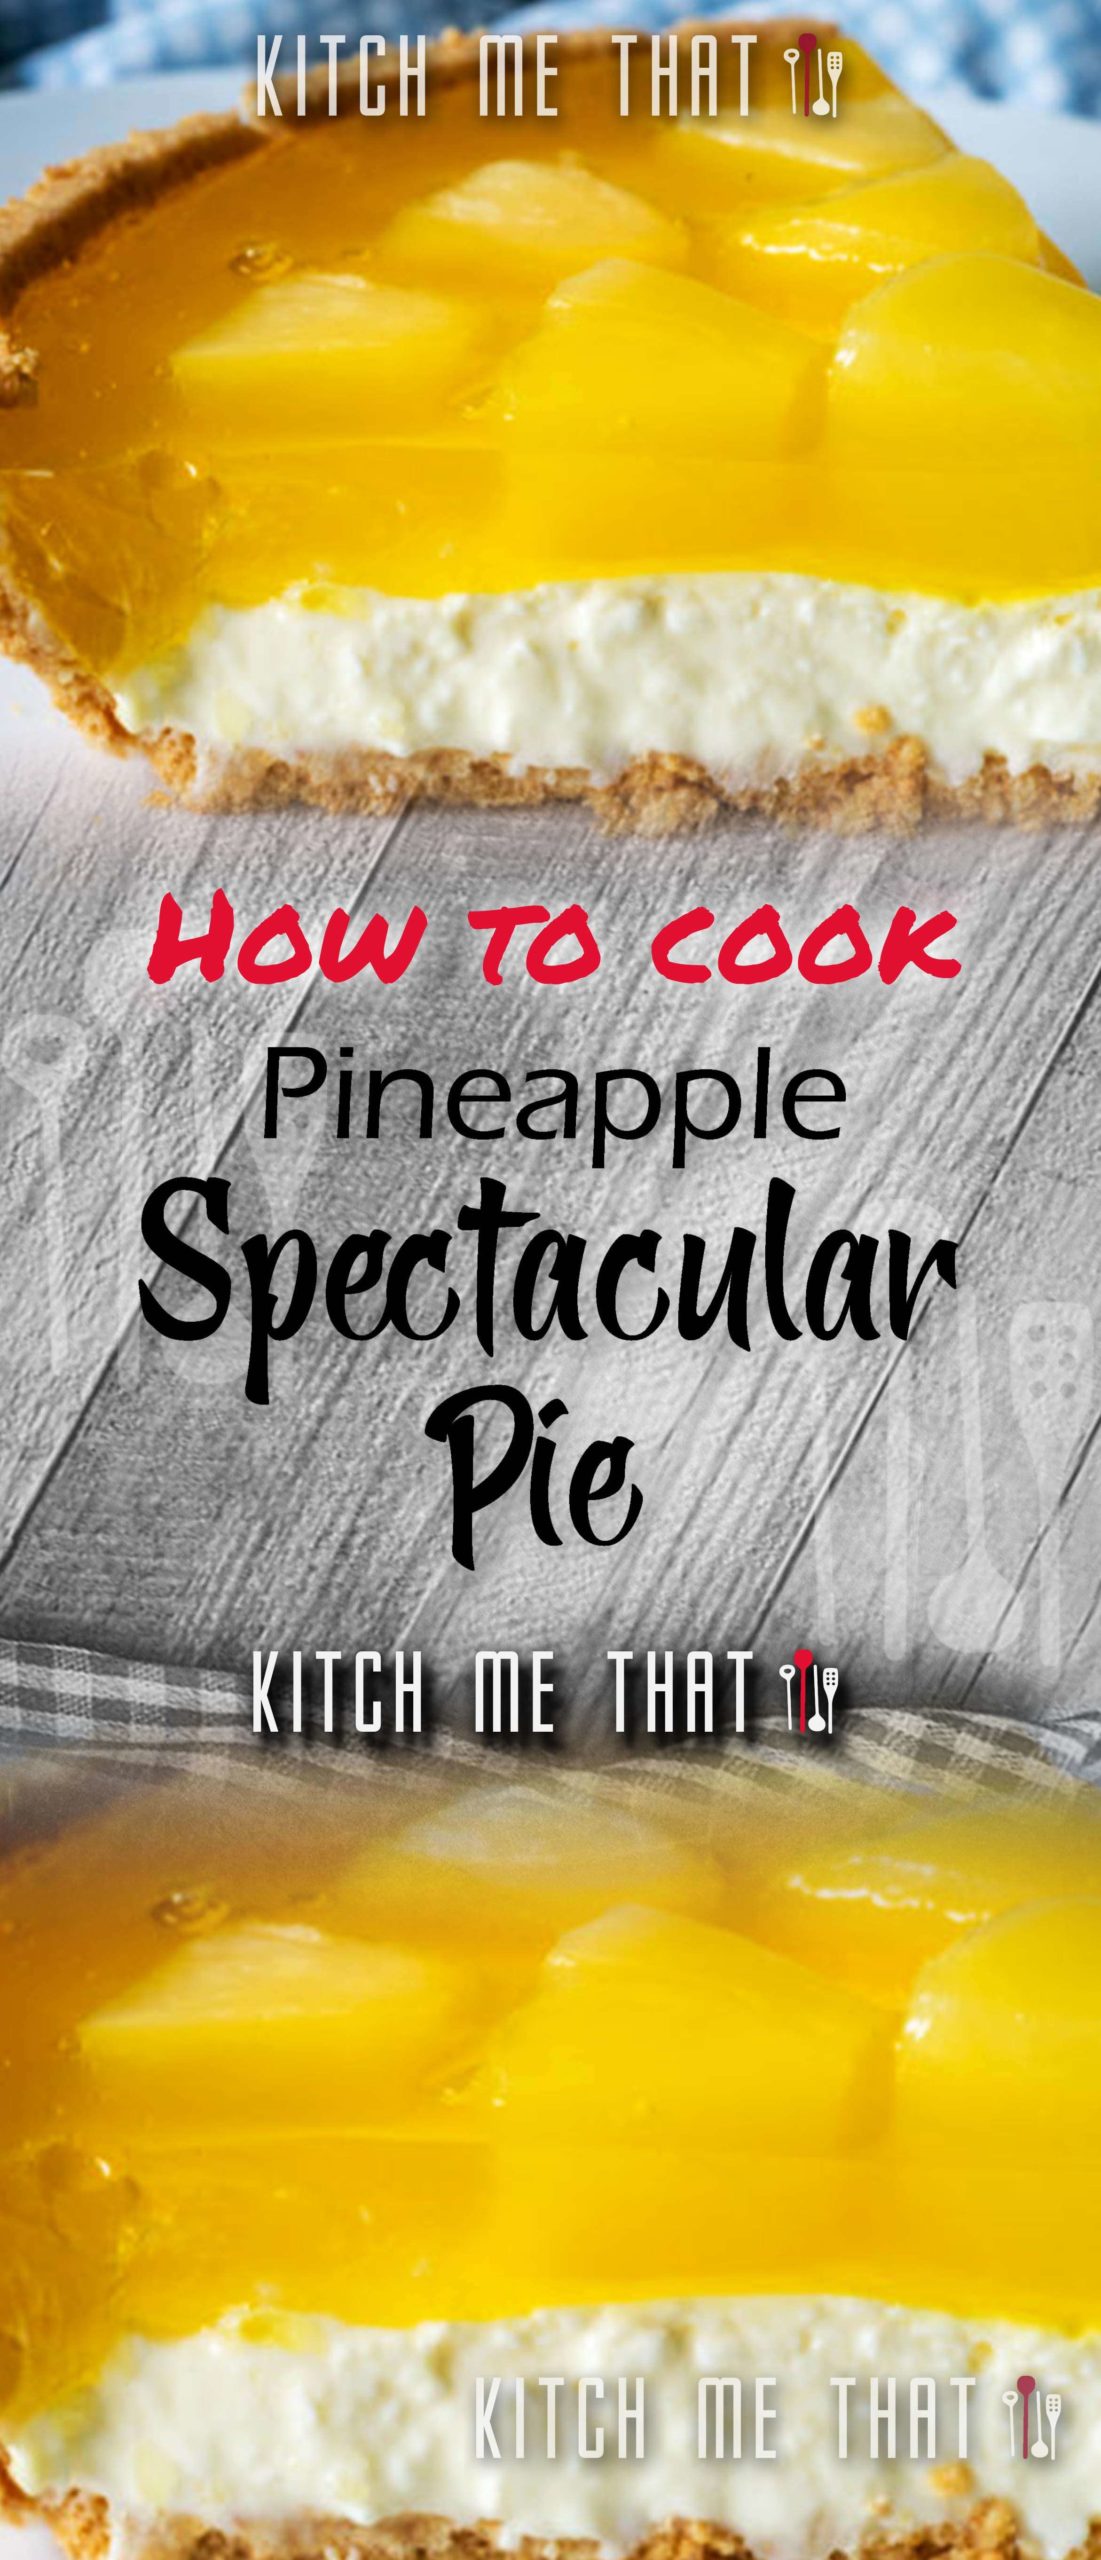 Pineapple Spectacular Pie